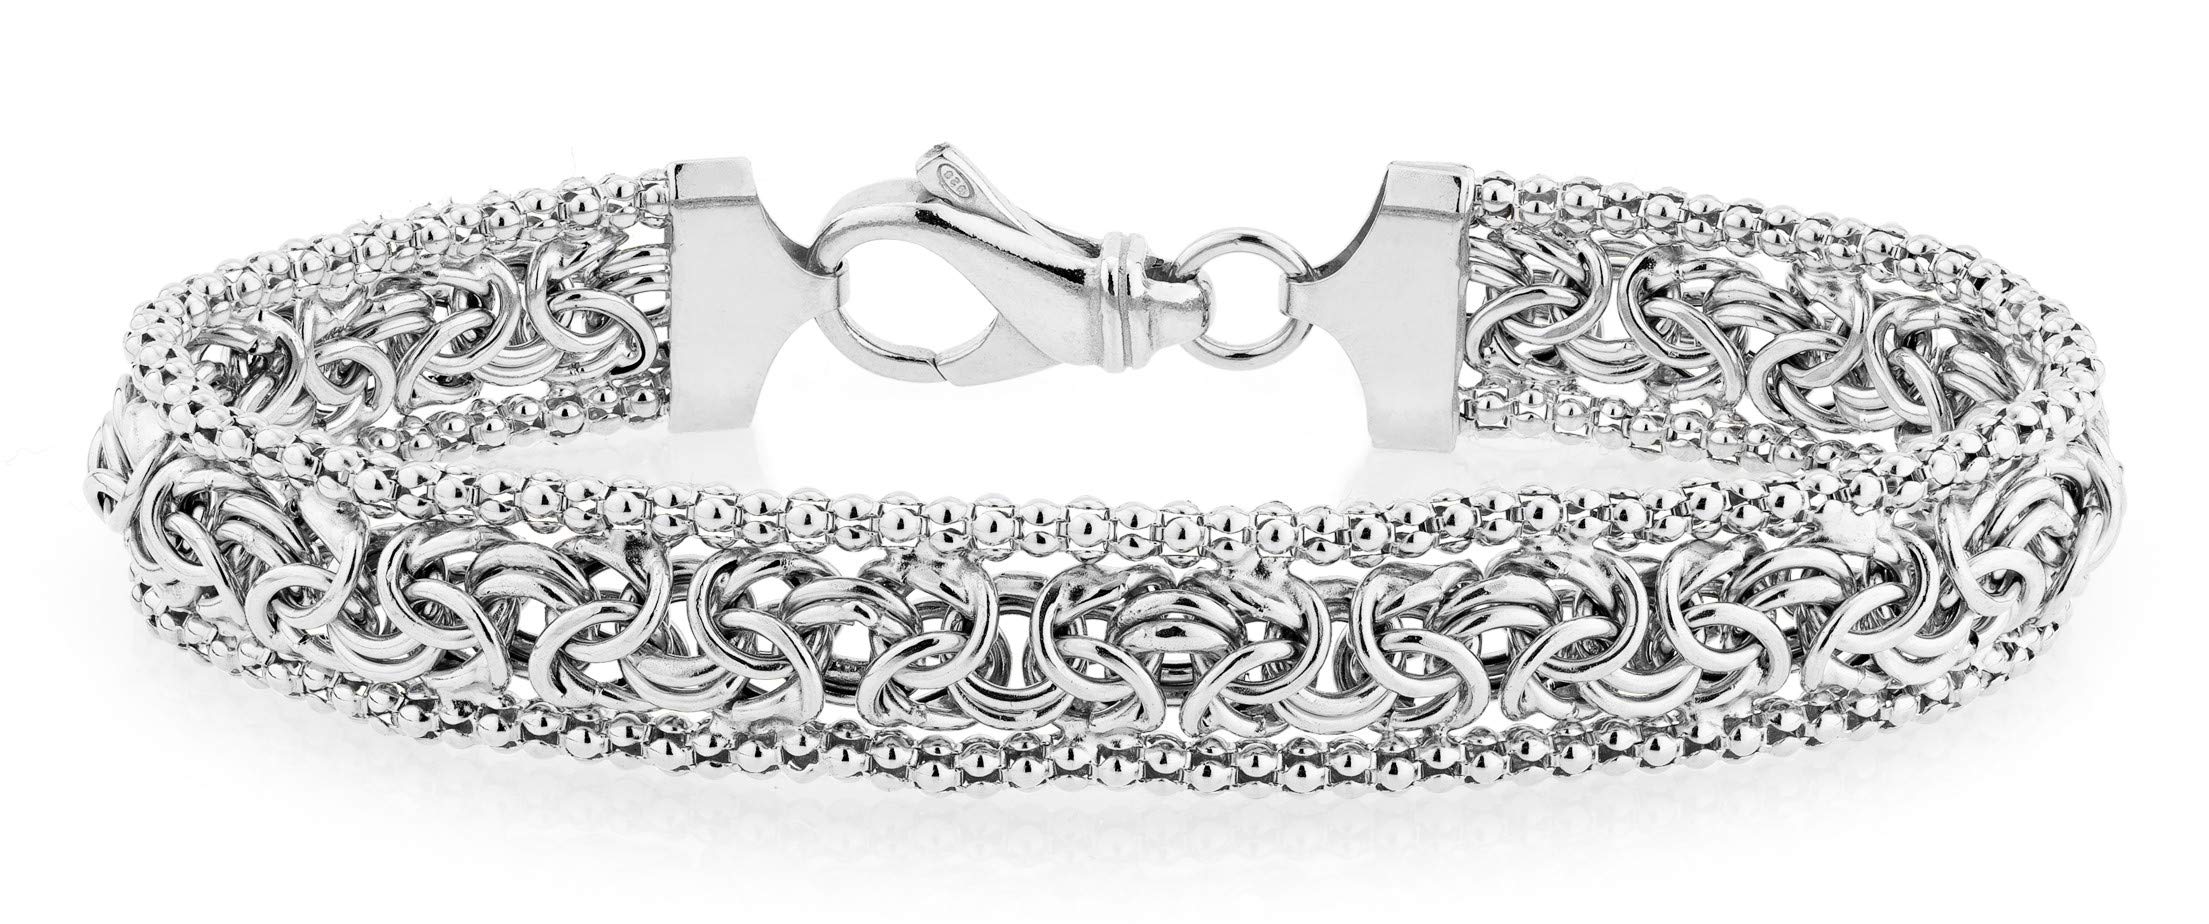 Miabella Italian 925 Sterling Silver Byzantine Beaded Mesh Link Chain Bracelet for Women, 925 Handmade in Italy